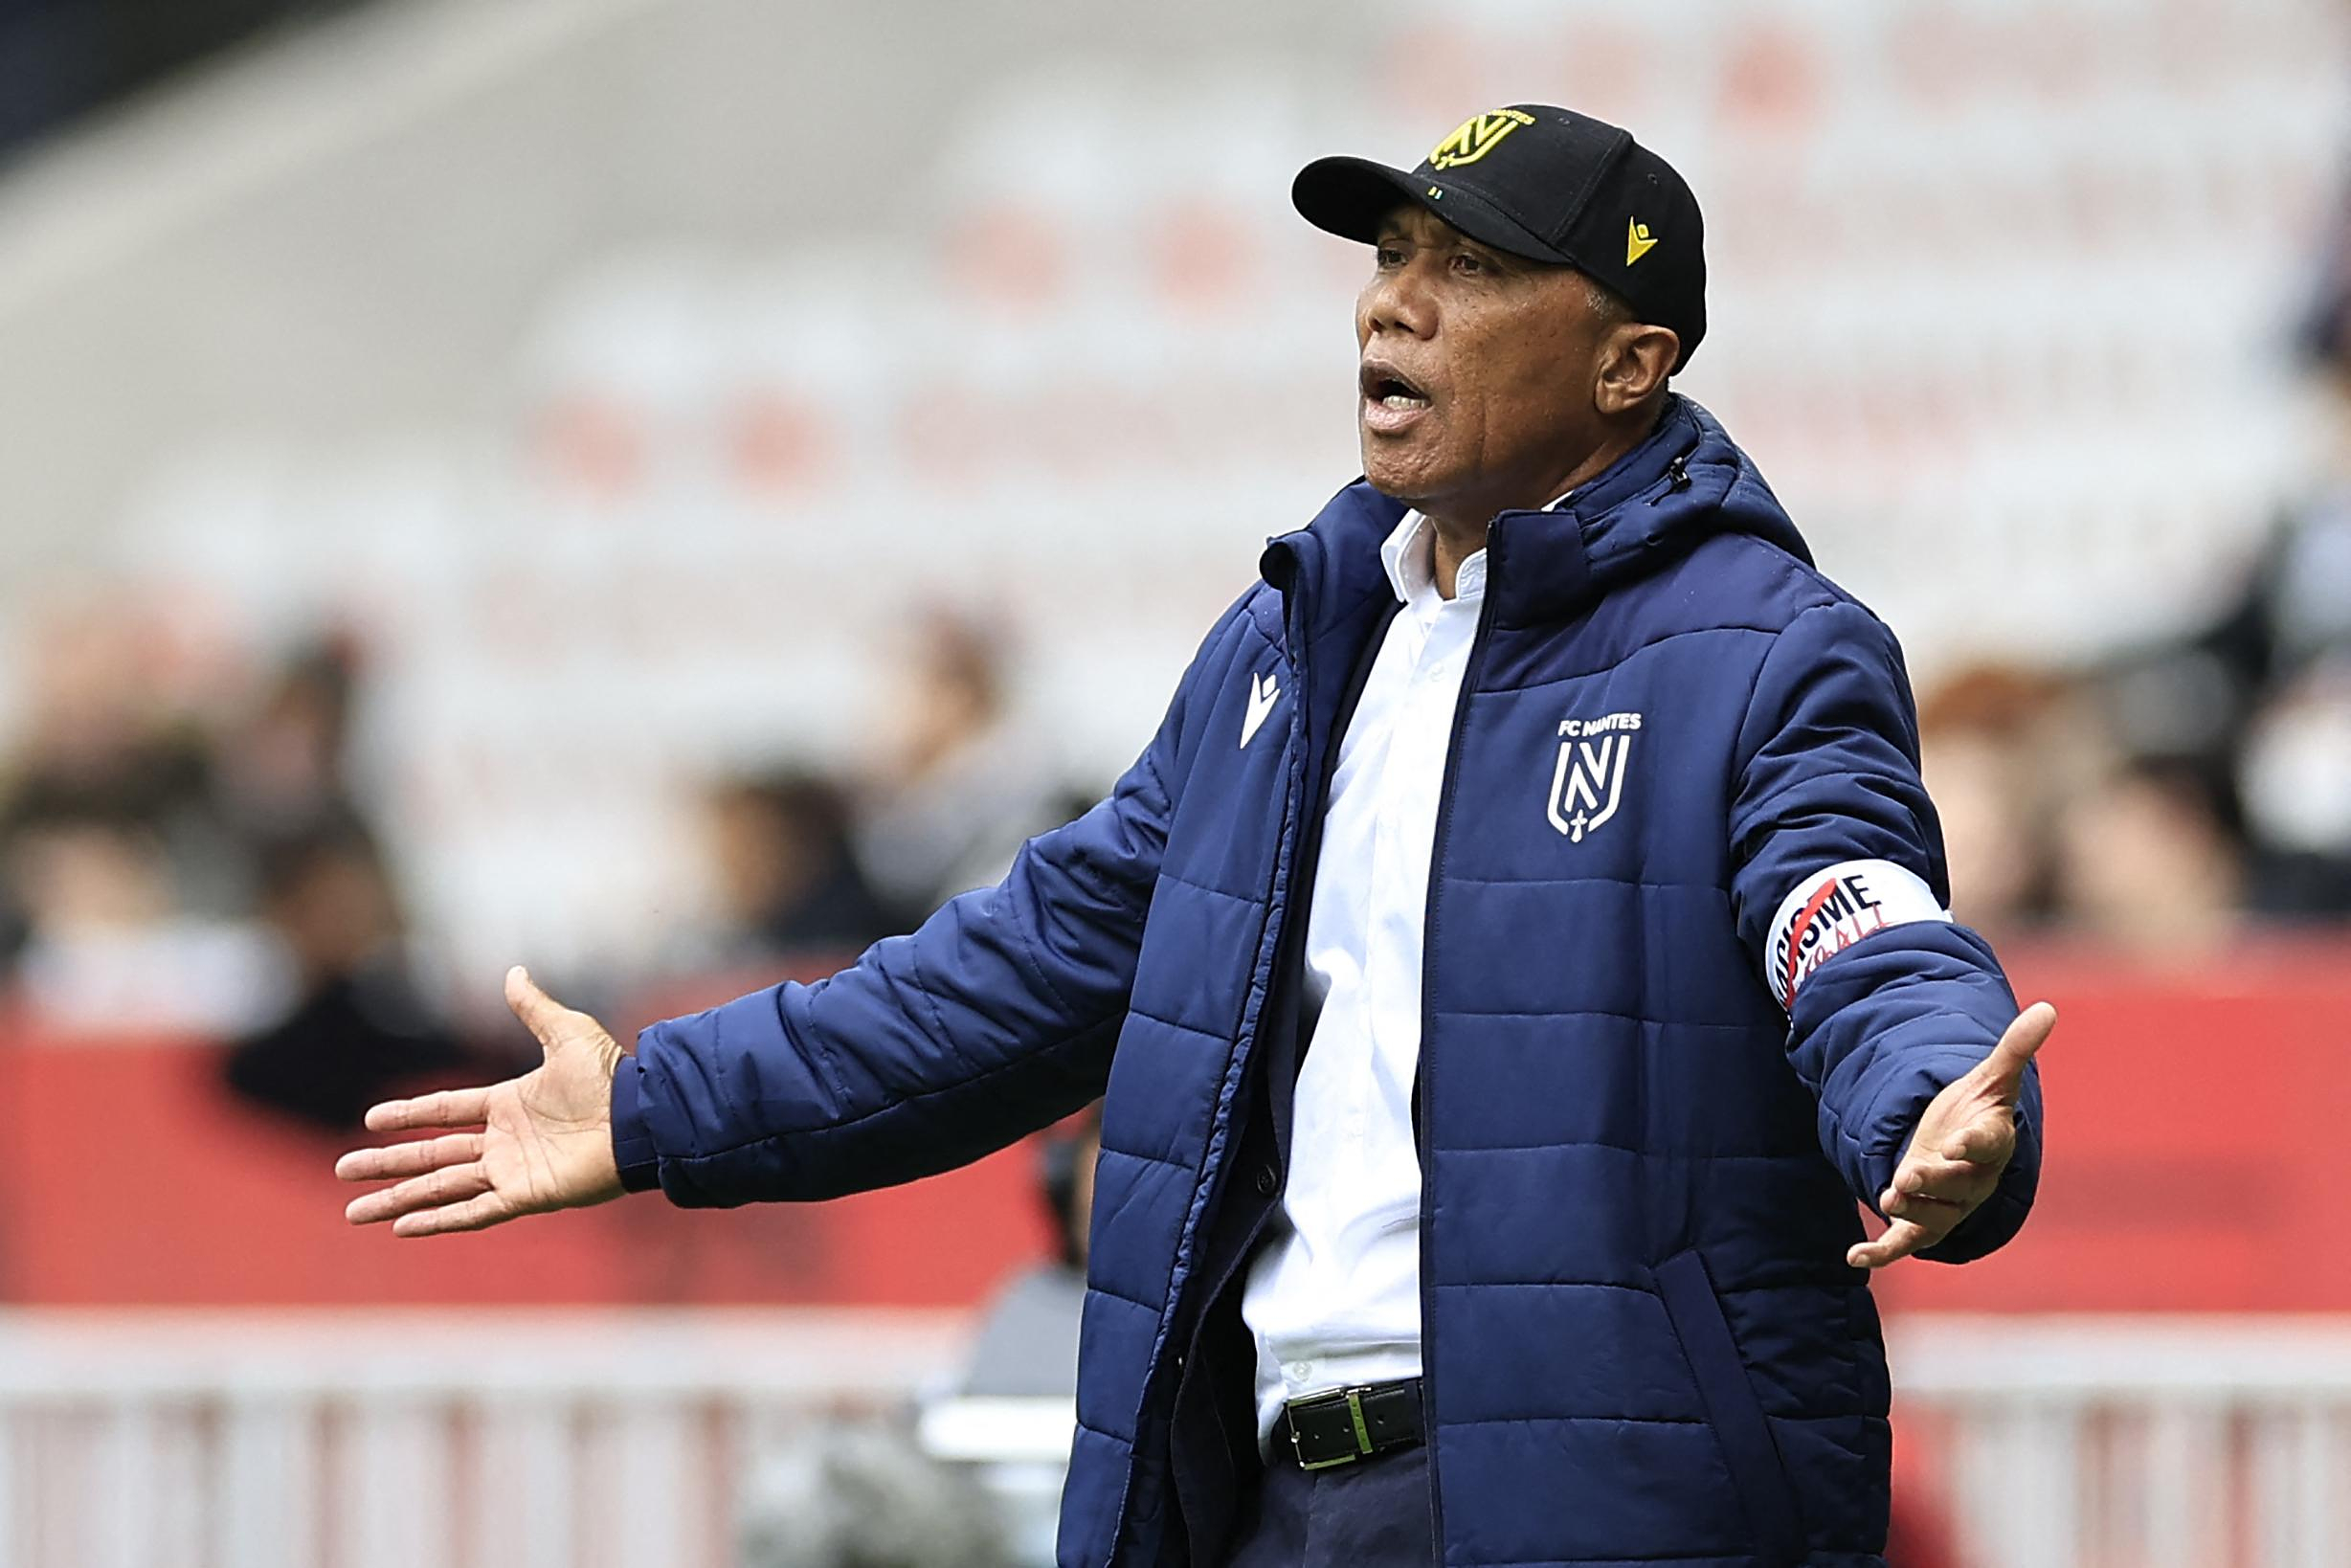 Ligue 1: “It’s absurd, I’m angry”, complains Kombouaré behind closed doors during Nantes-Lyon